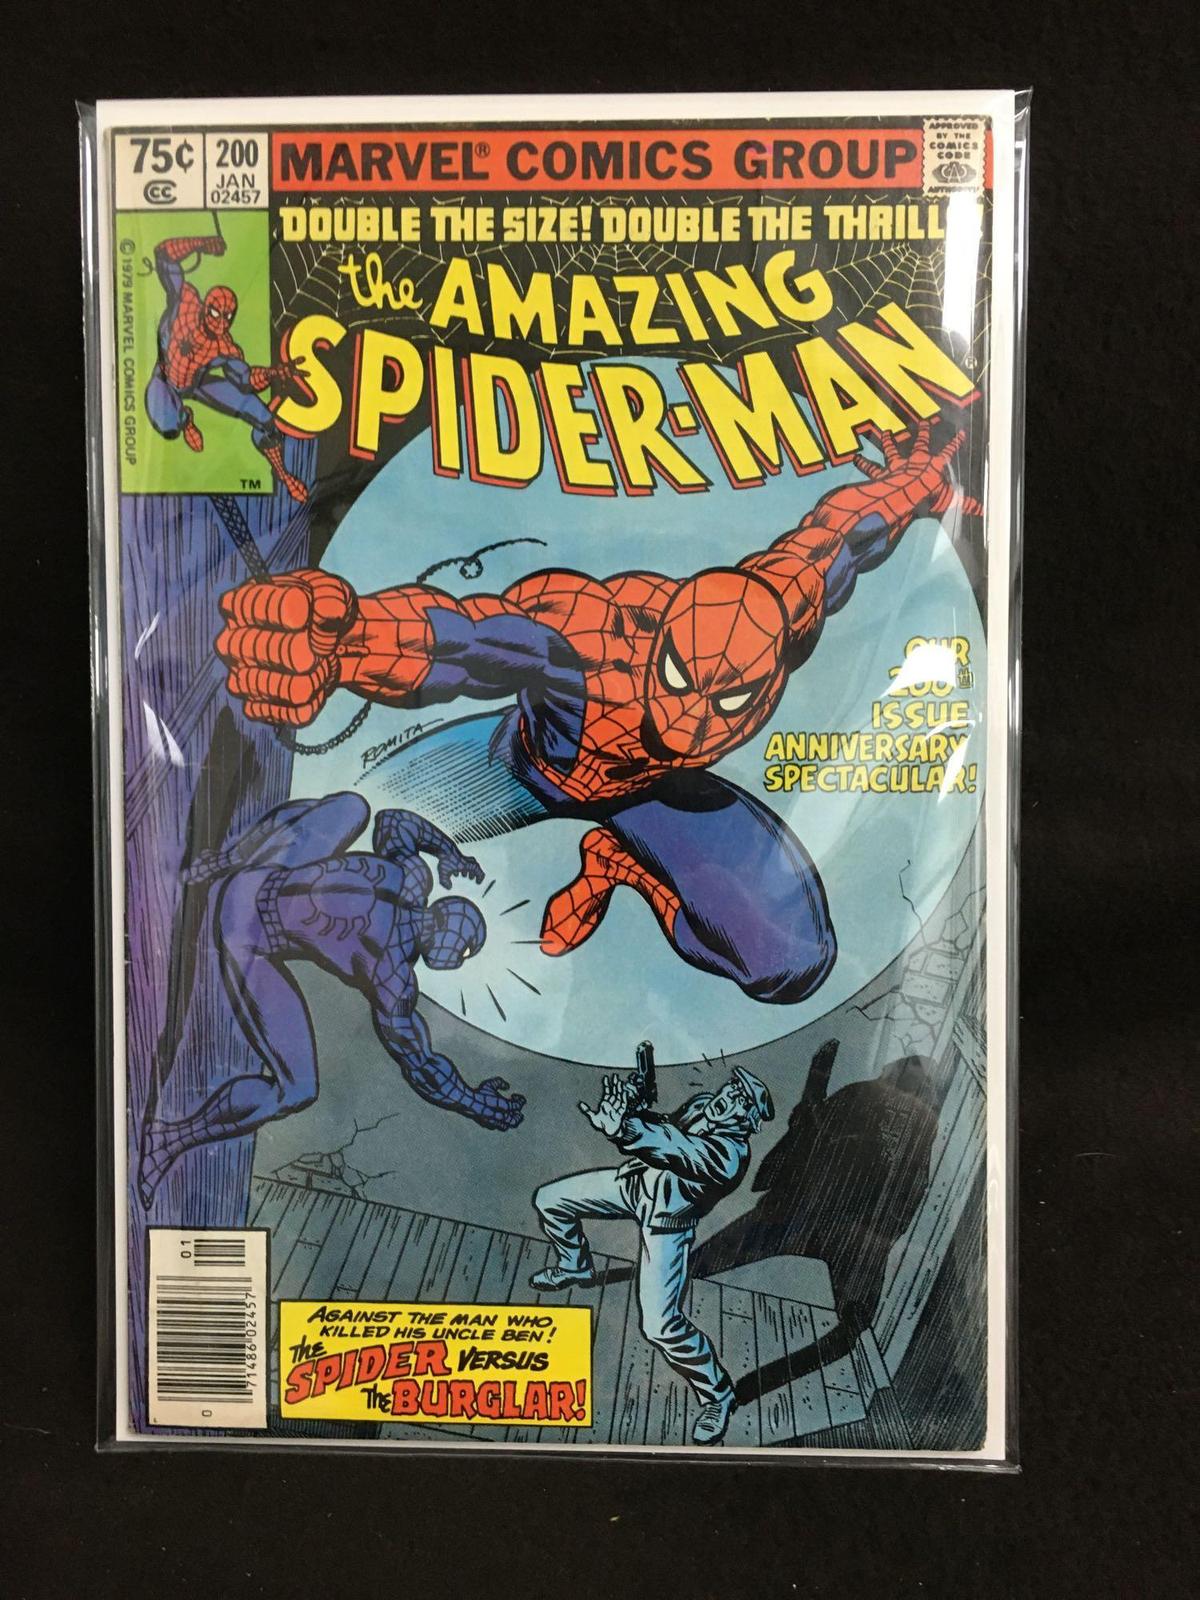 The Amazing Spider-Man #200 Vintage Comic Book - ATTIC FIND!